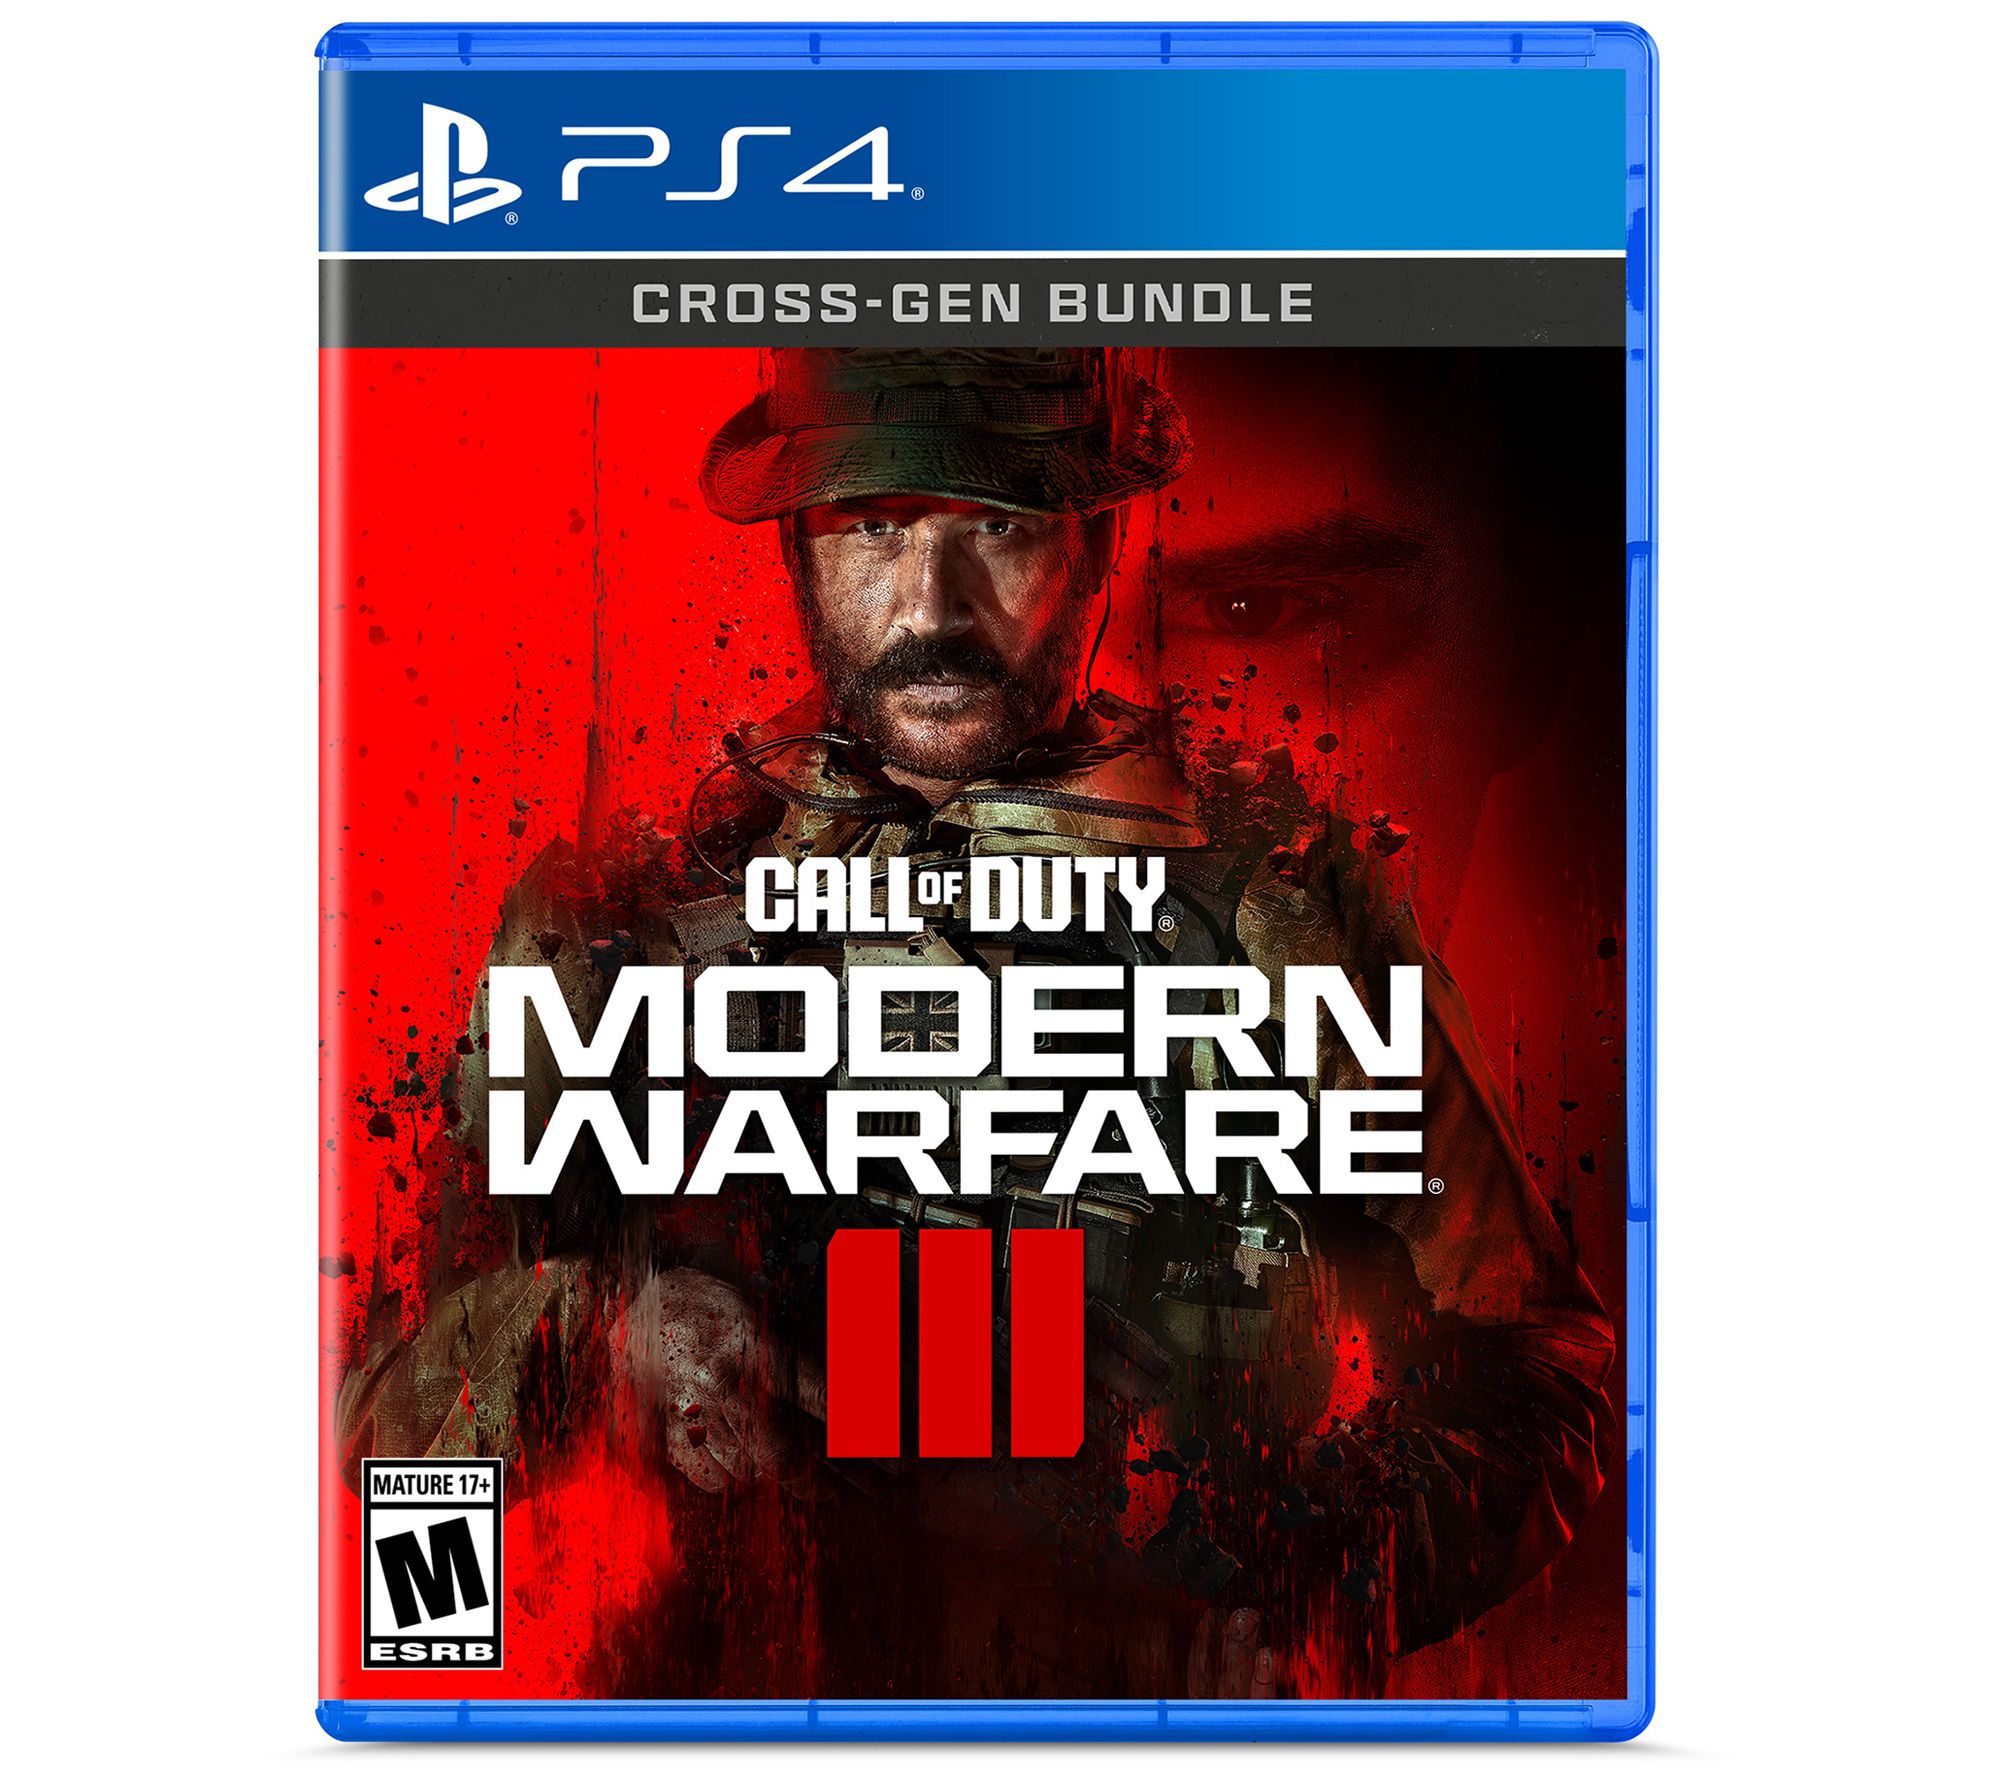 Call of Duty: Advanced Warfare Gold Edition (PS4)